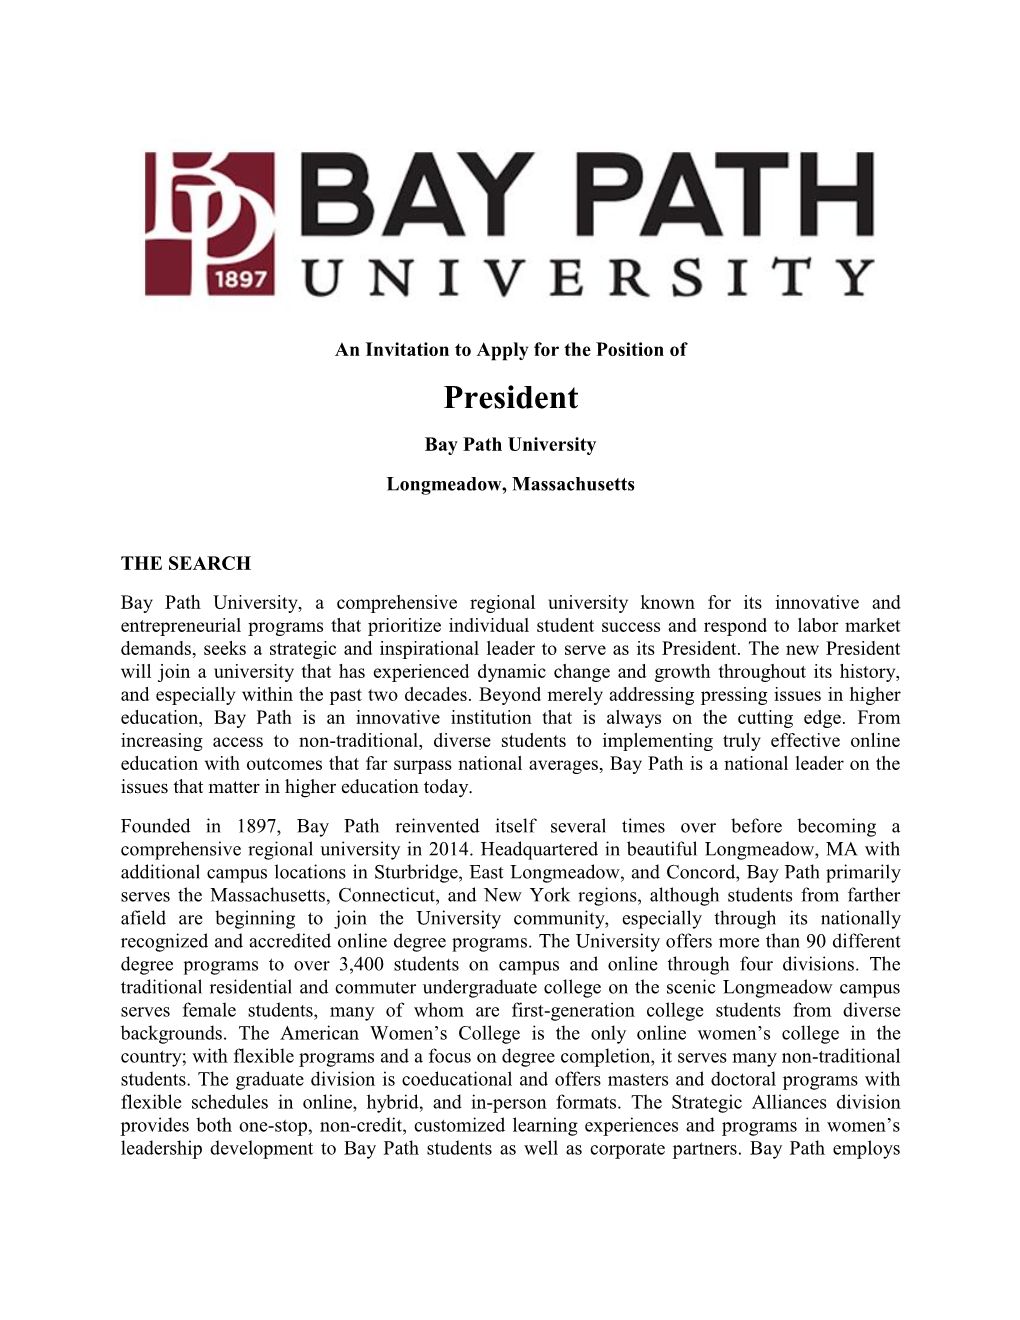 President Bay Path University Longmeadow, Massachusetts